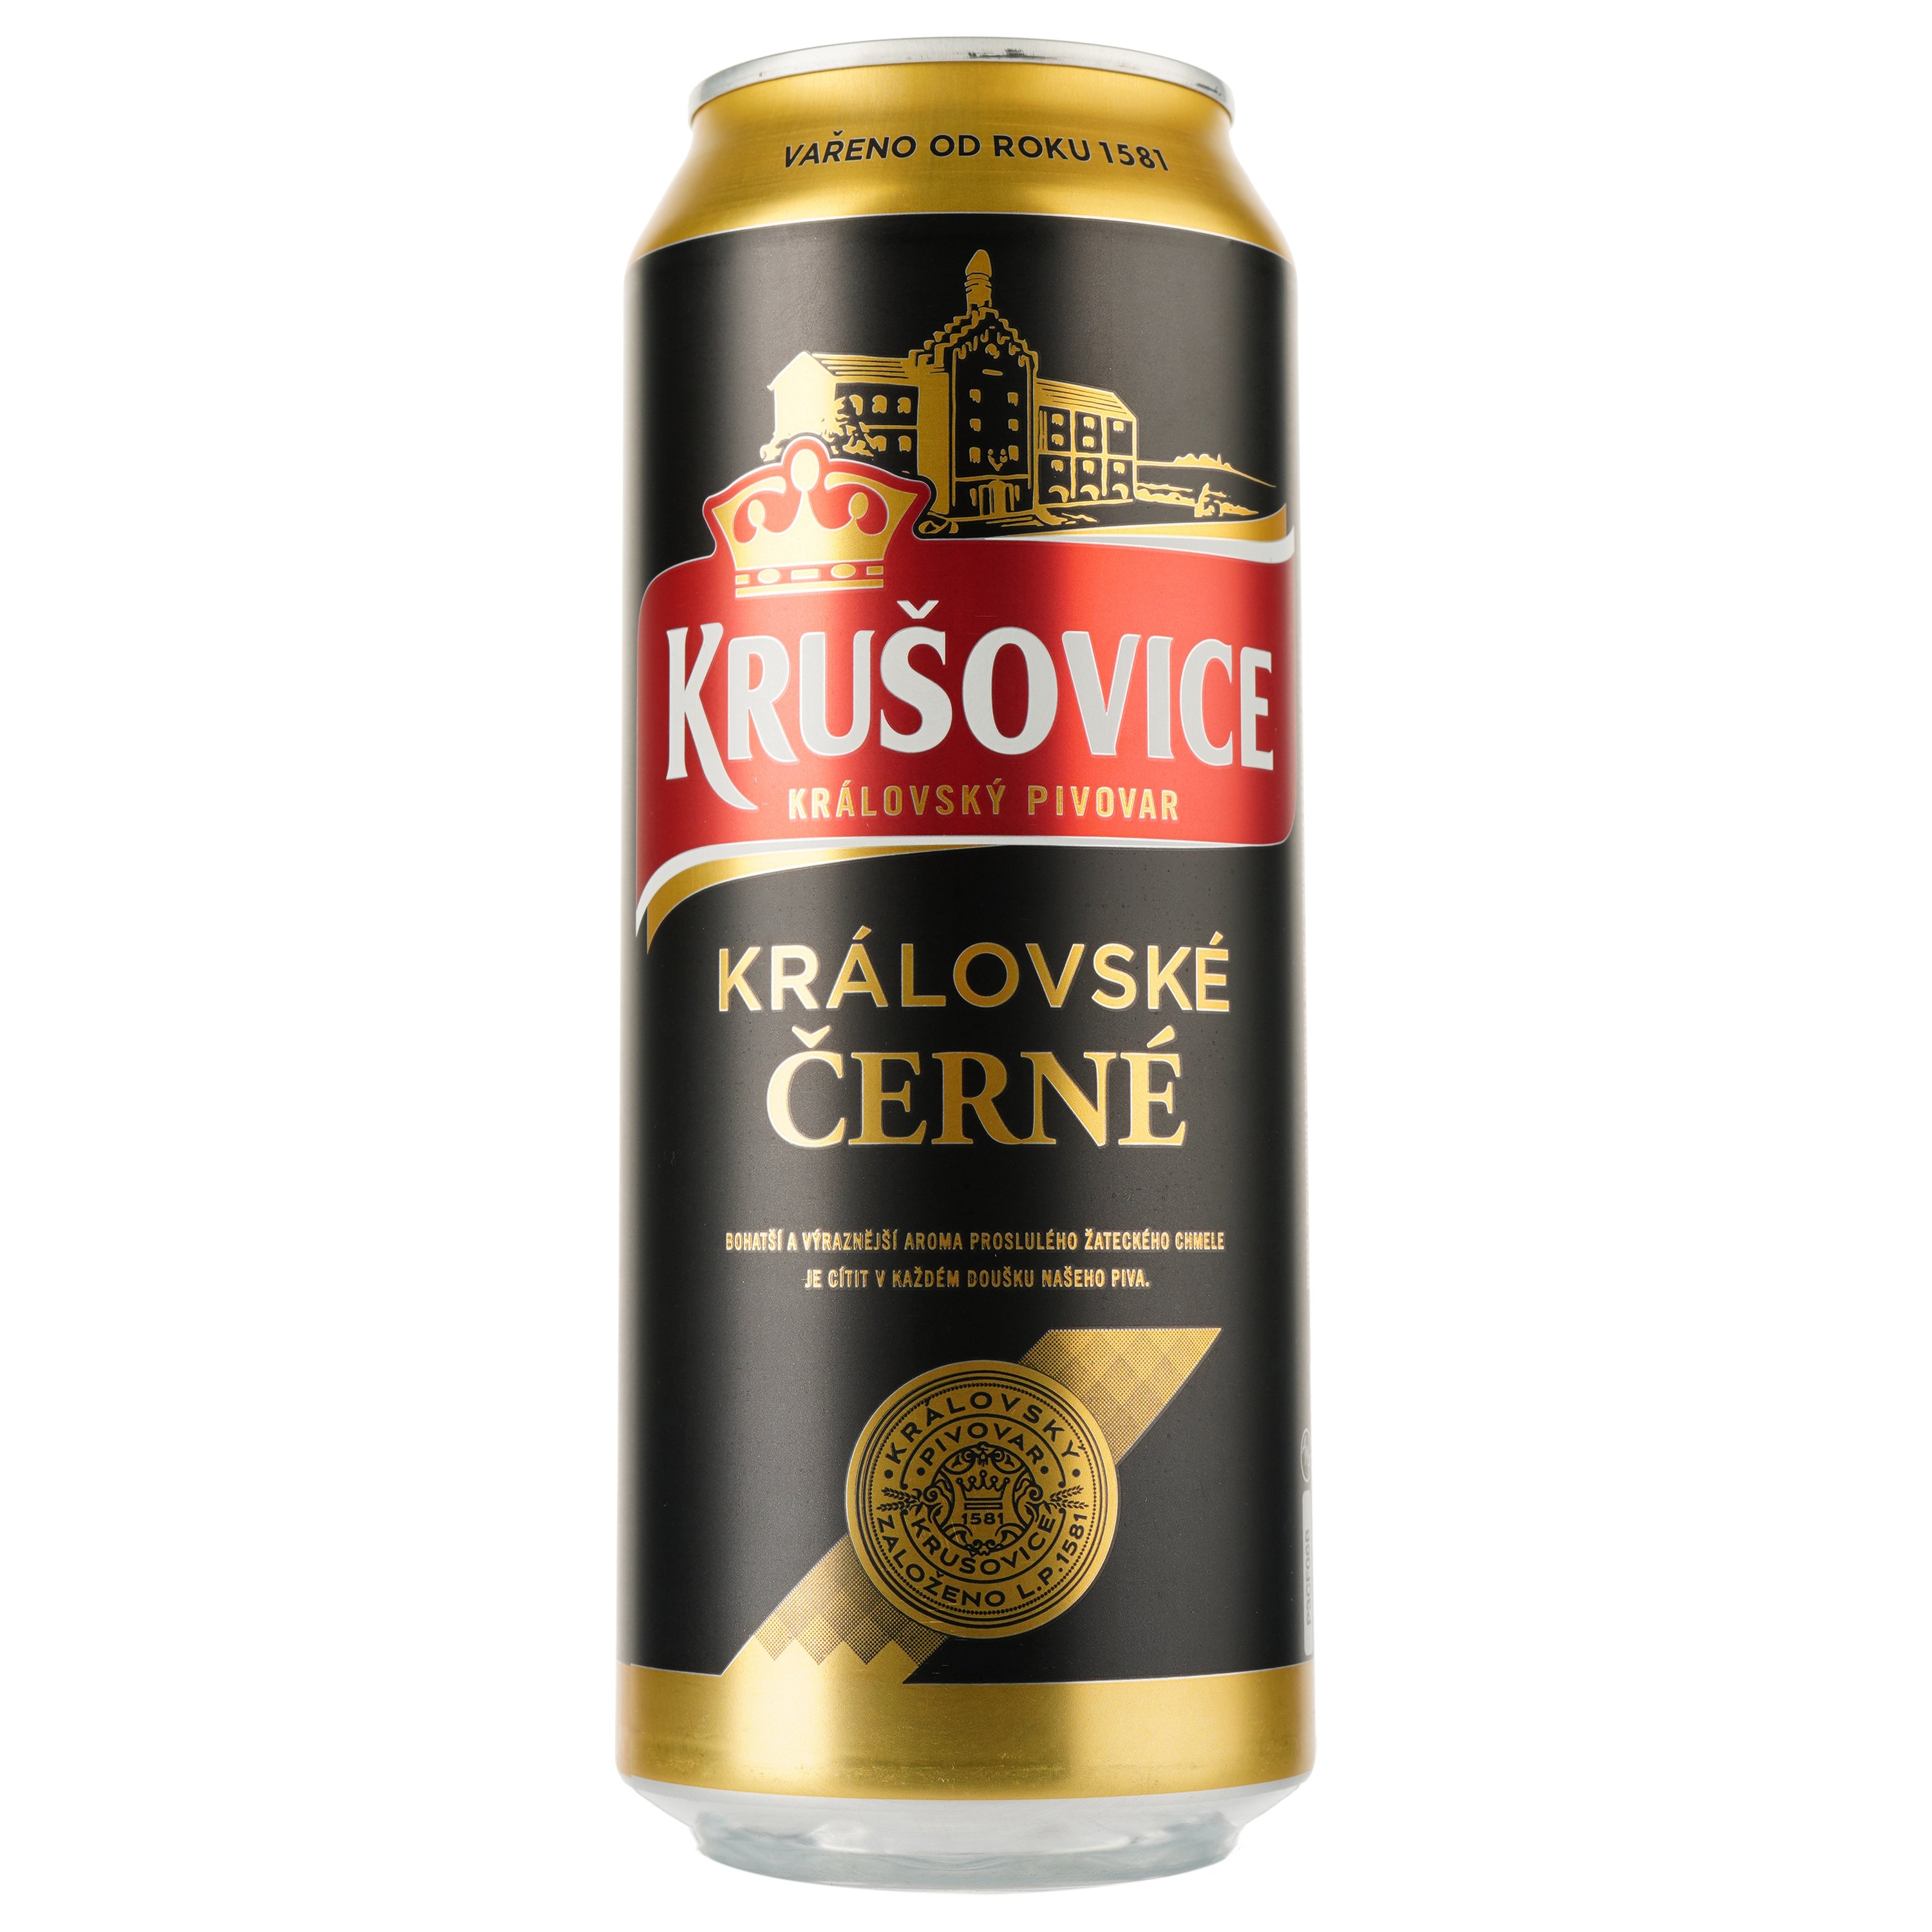 Пиво Krusovice Cerne, темное, 3,8%, ж/б, 0,5 л (743431) - фото 1